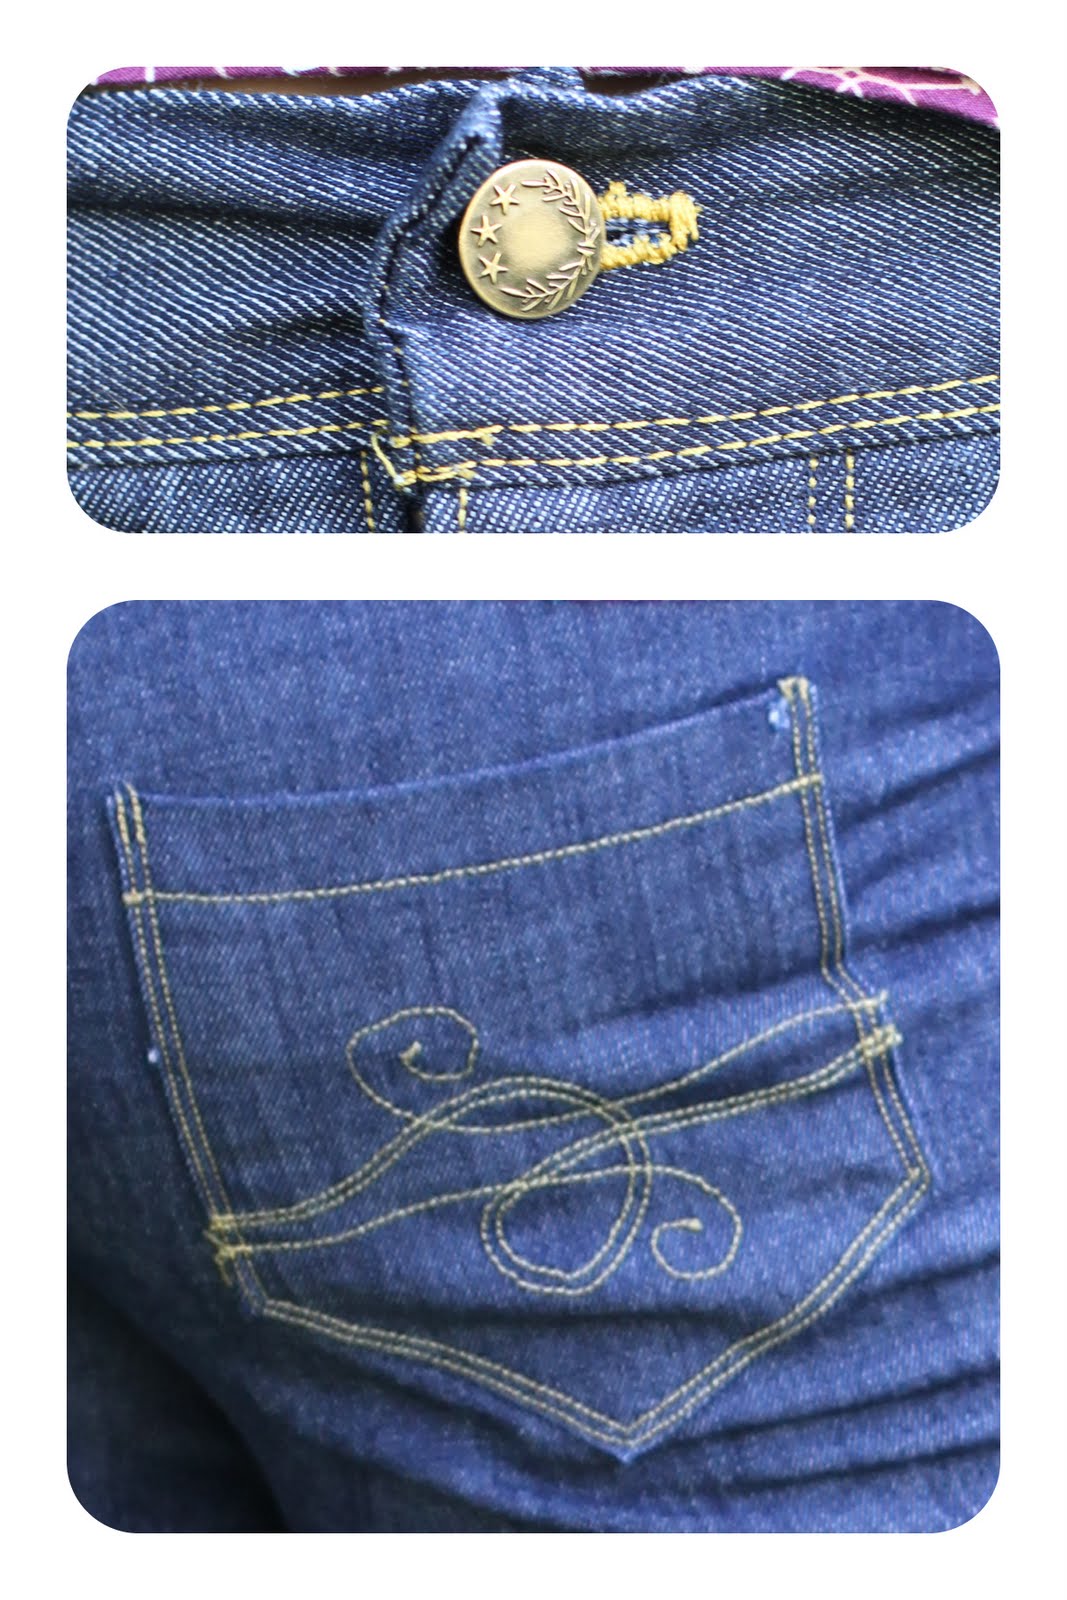 jeans thread